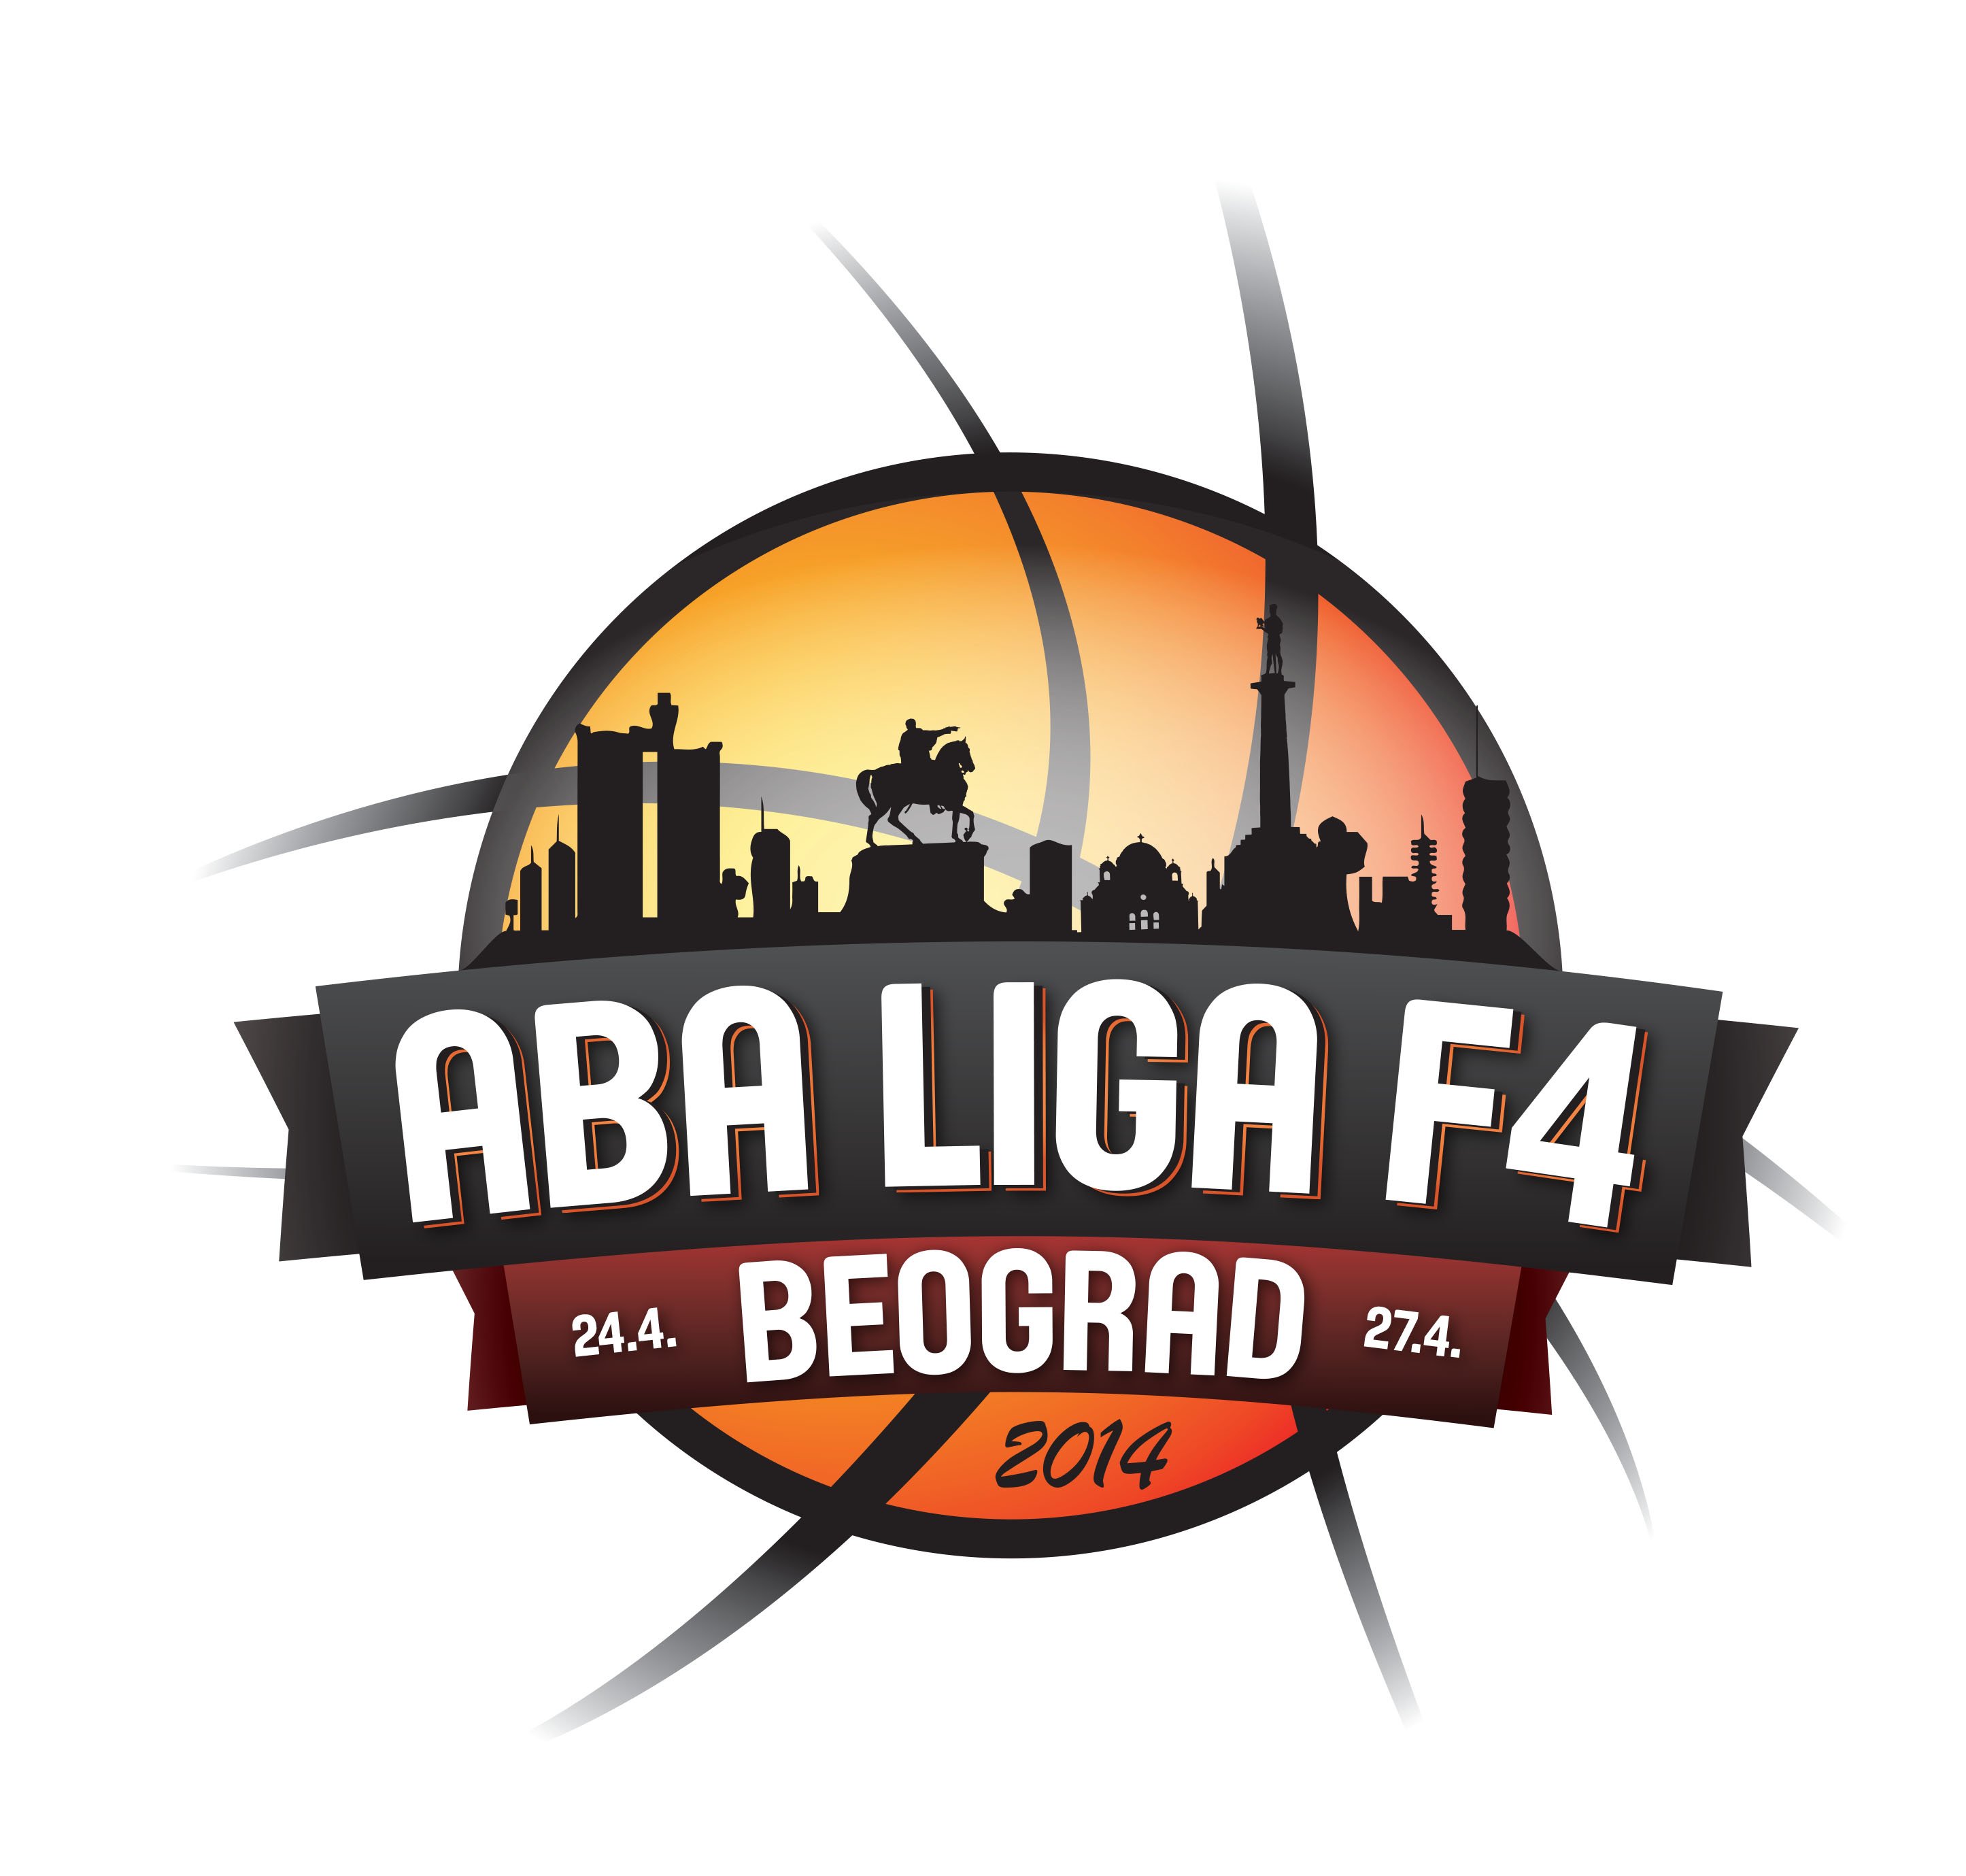 ABA liga F4 2014 Logo